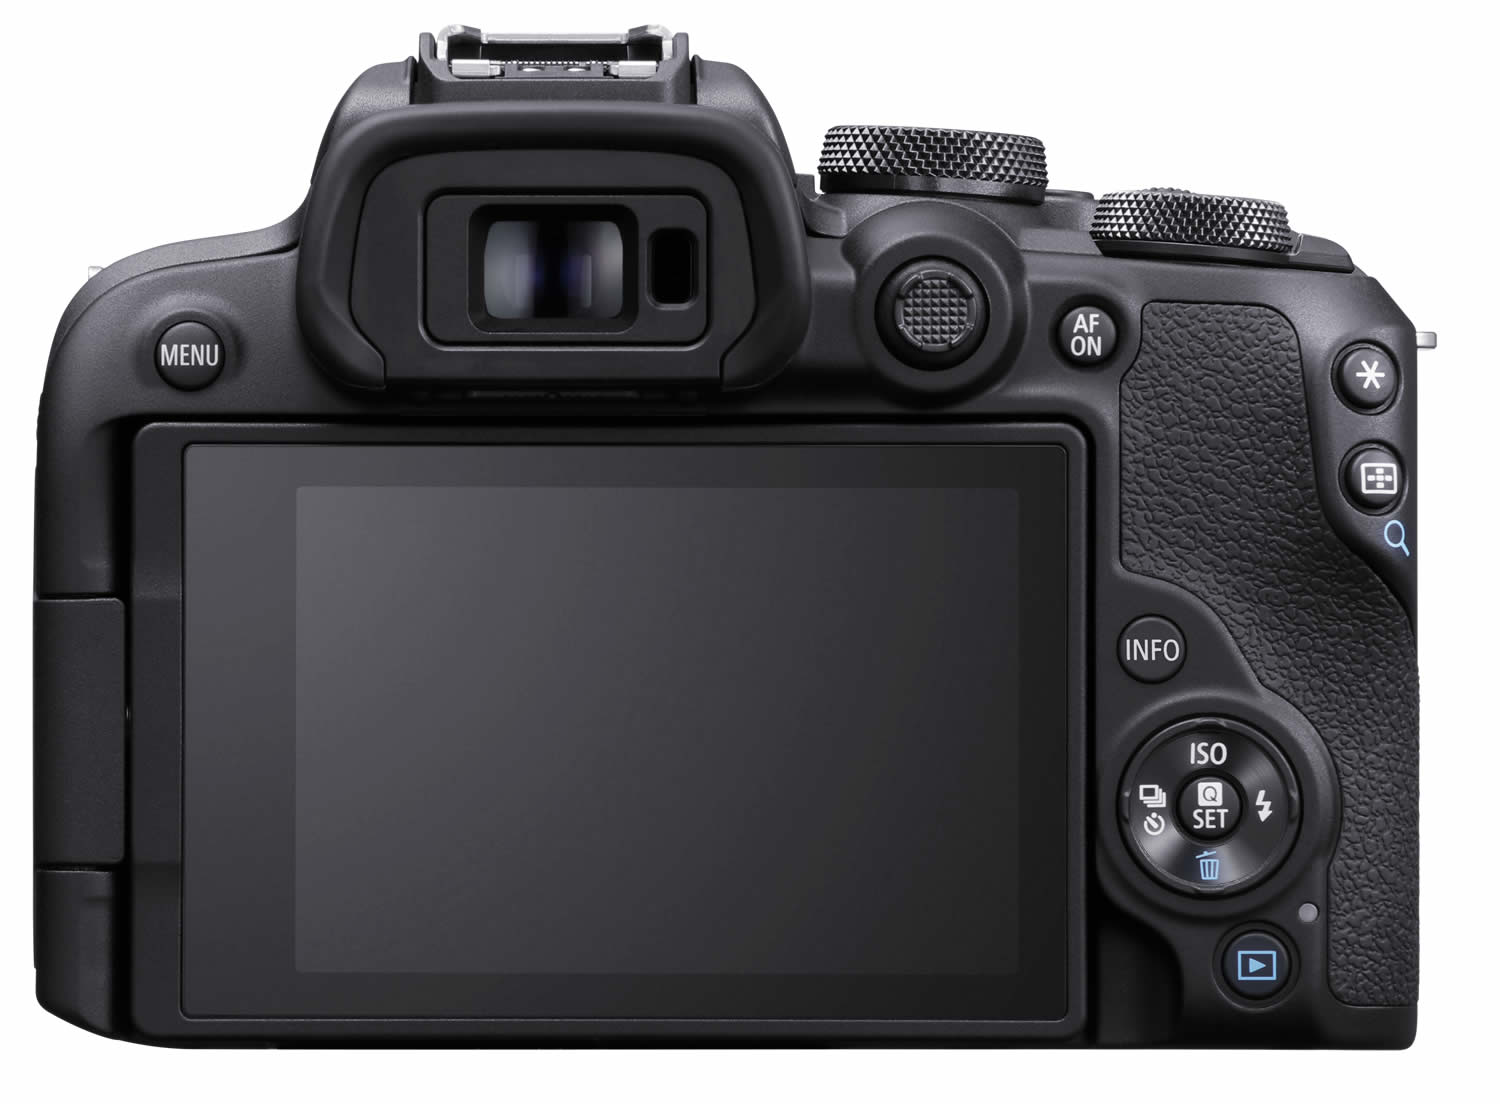 Canon EOS R10 Kit + RF-S 18-45mm IS STM digitale Systemkamera-  Fotofachgeschäft mit Tradition